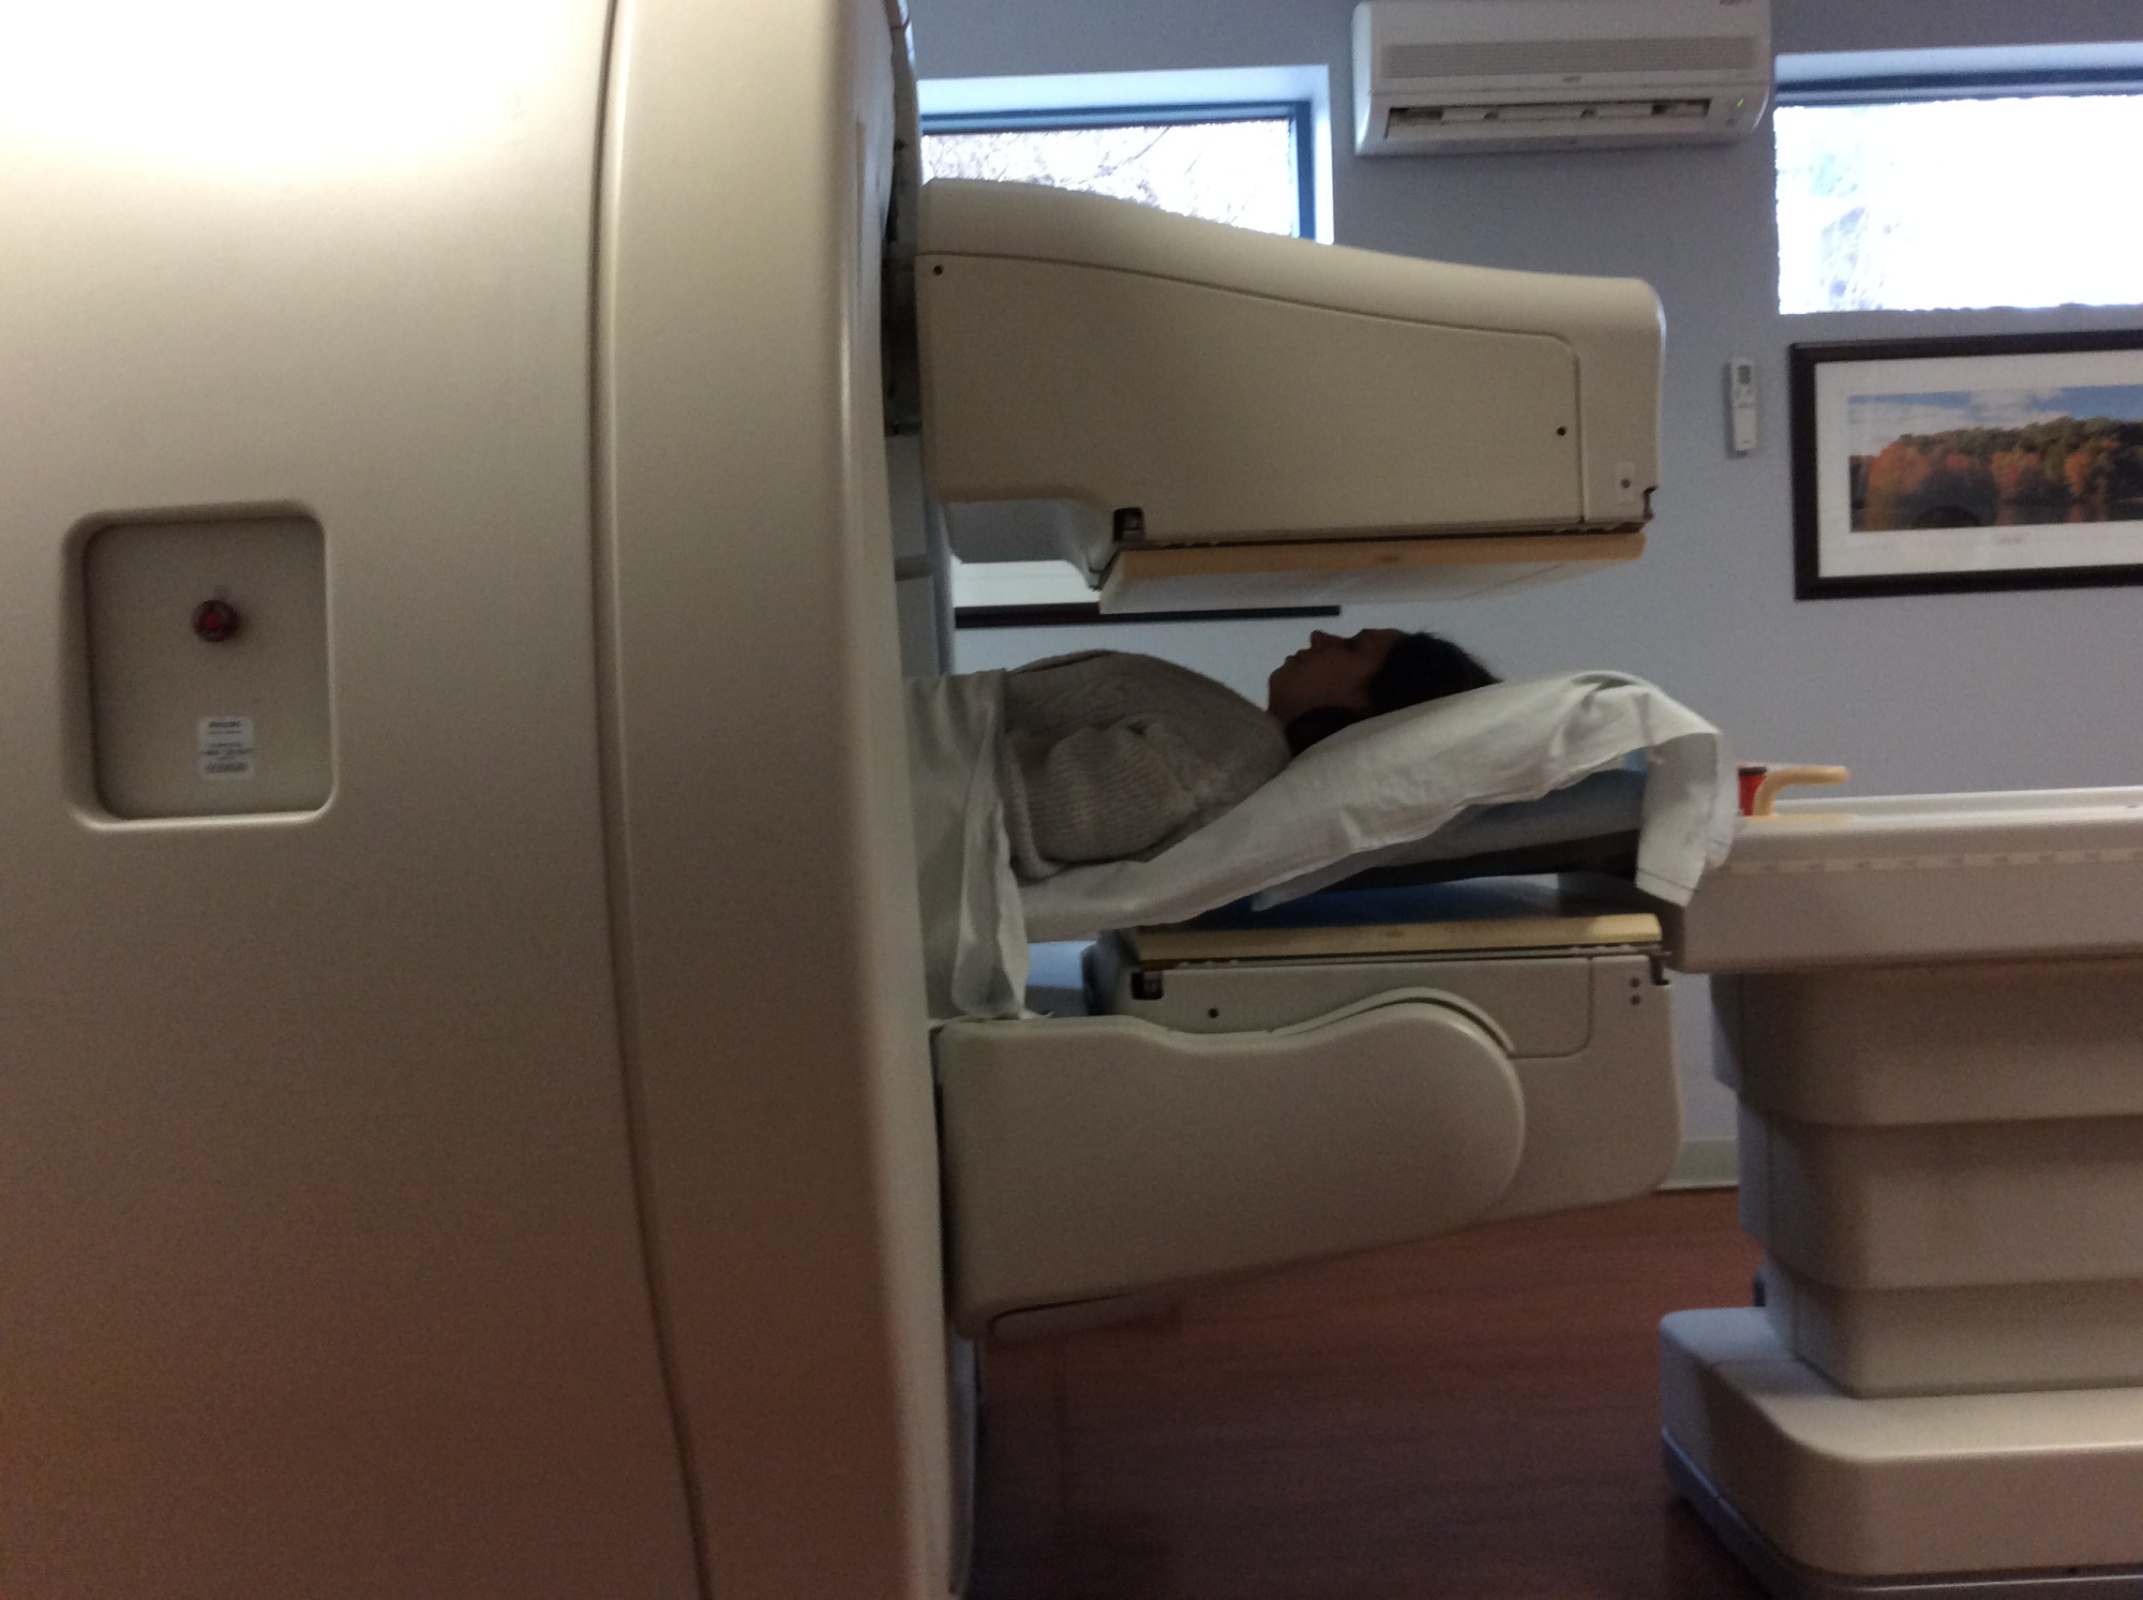 Getting a bone scan